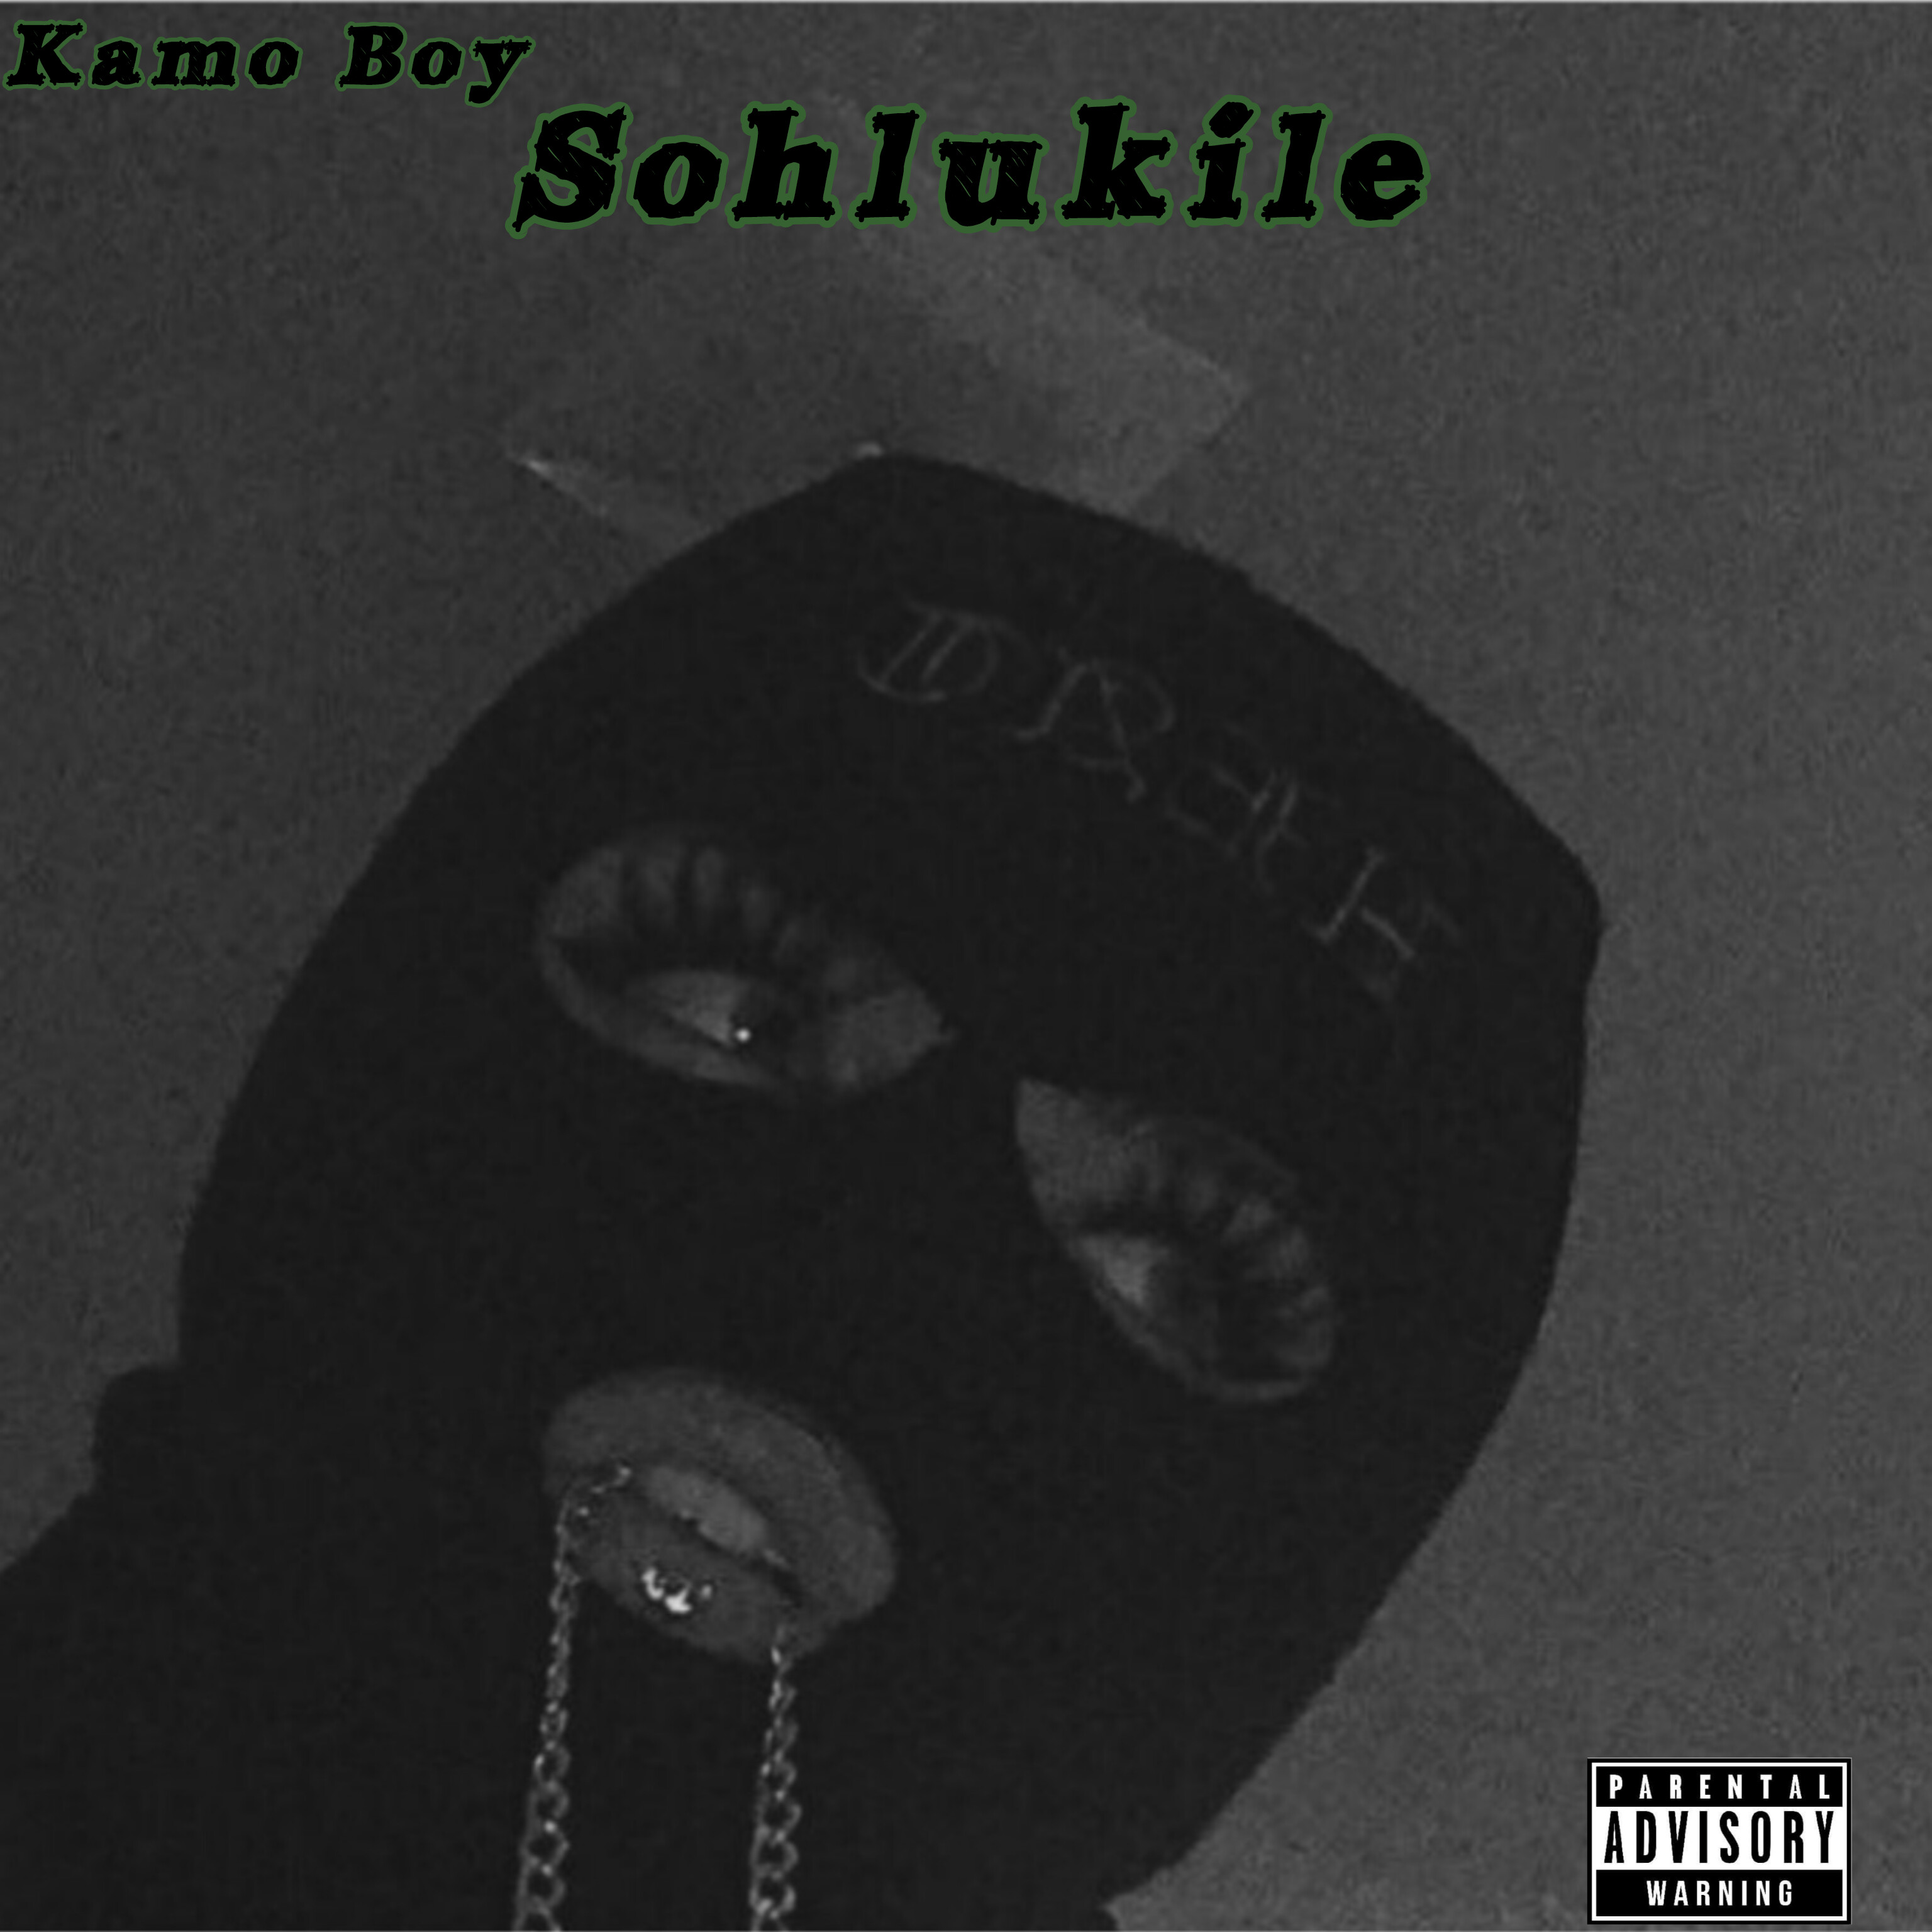 Sohlukile - Kamo Boy